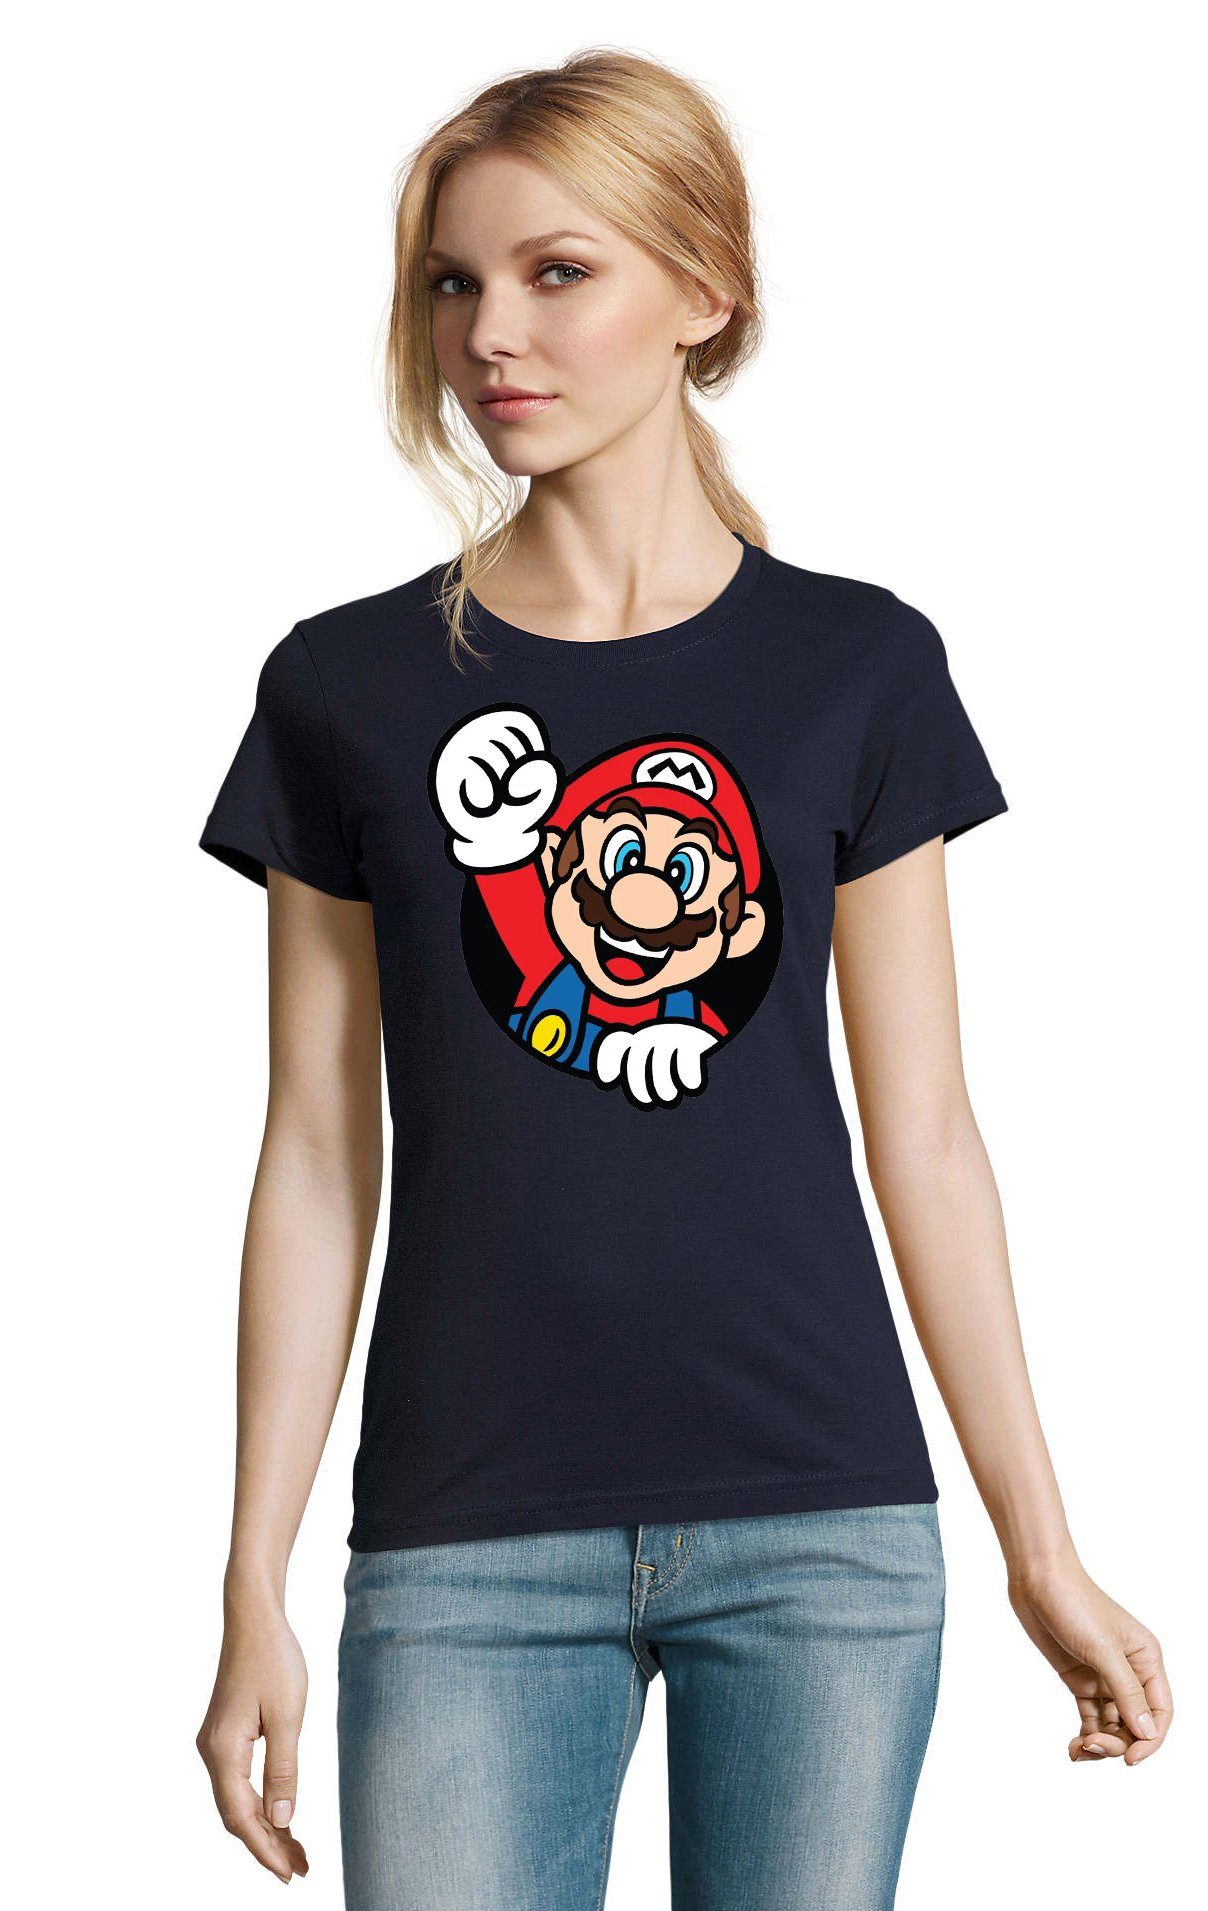 & Nerd Blondie Brownie Konsole Navyblau Damen Nintendo Spiel Faust Mario Super T-Shirt Gaming